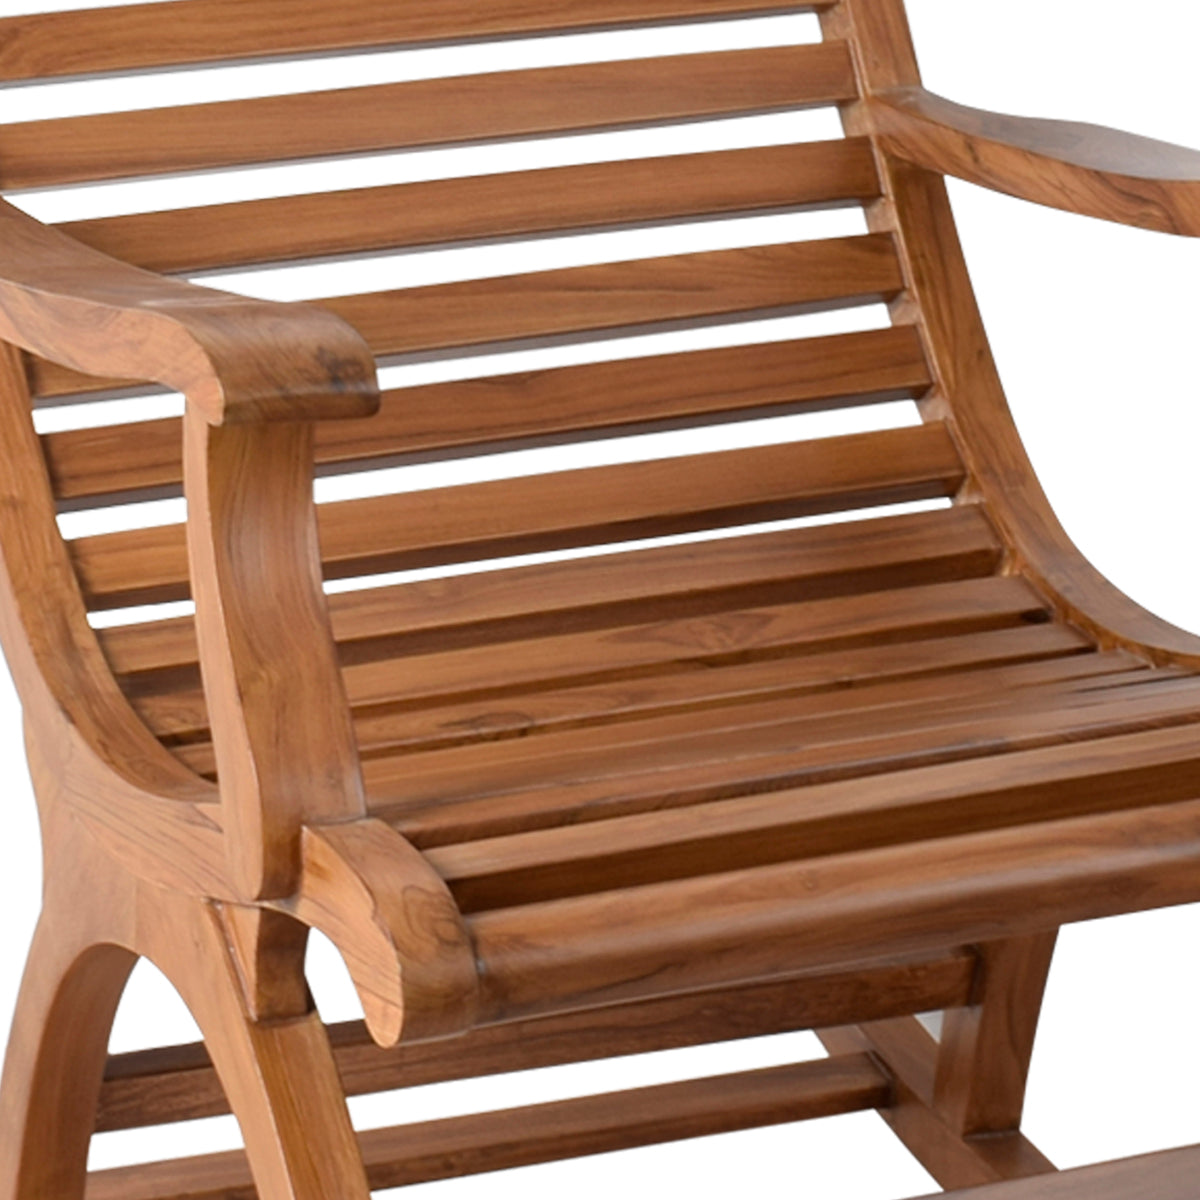 Mince Teak Wood Rocking Chair (Brown)